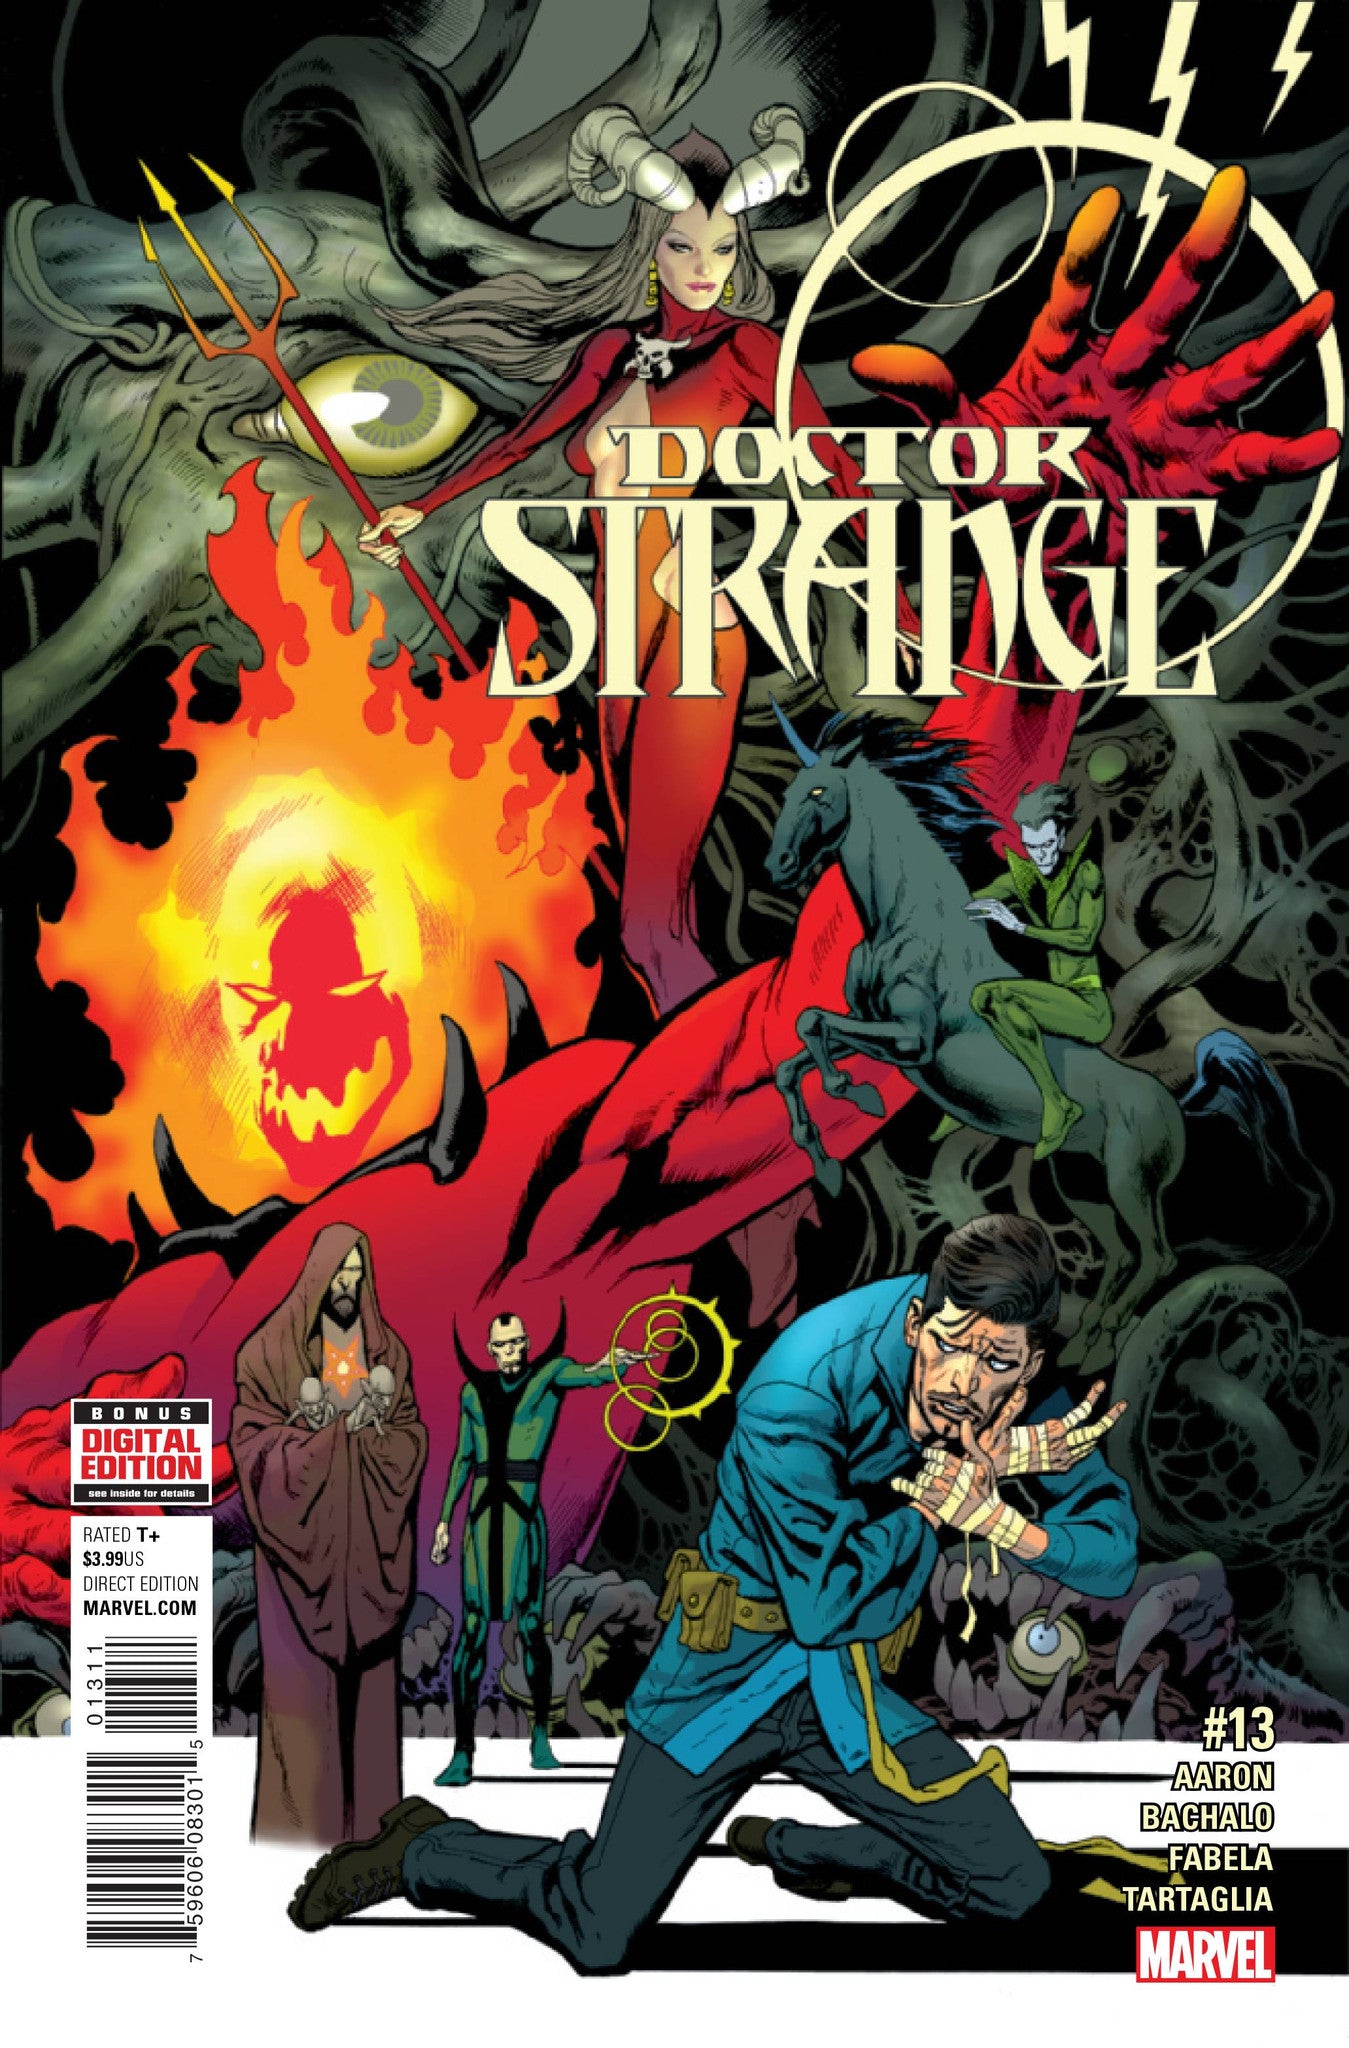 NOW DOCTOR STRANGE #13 COVER